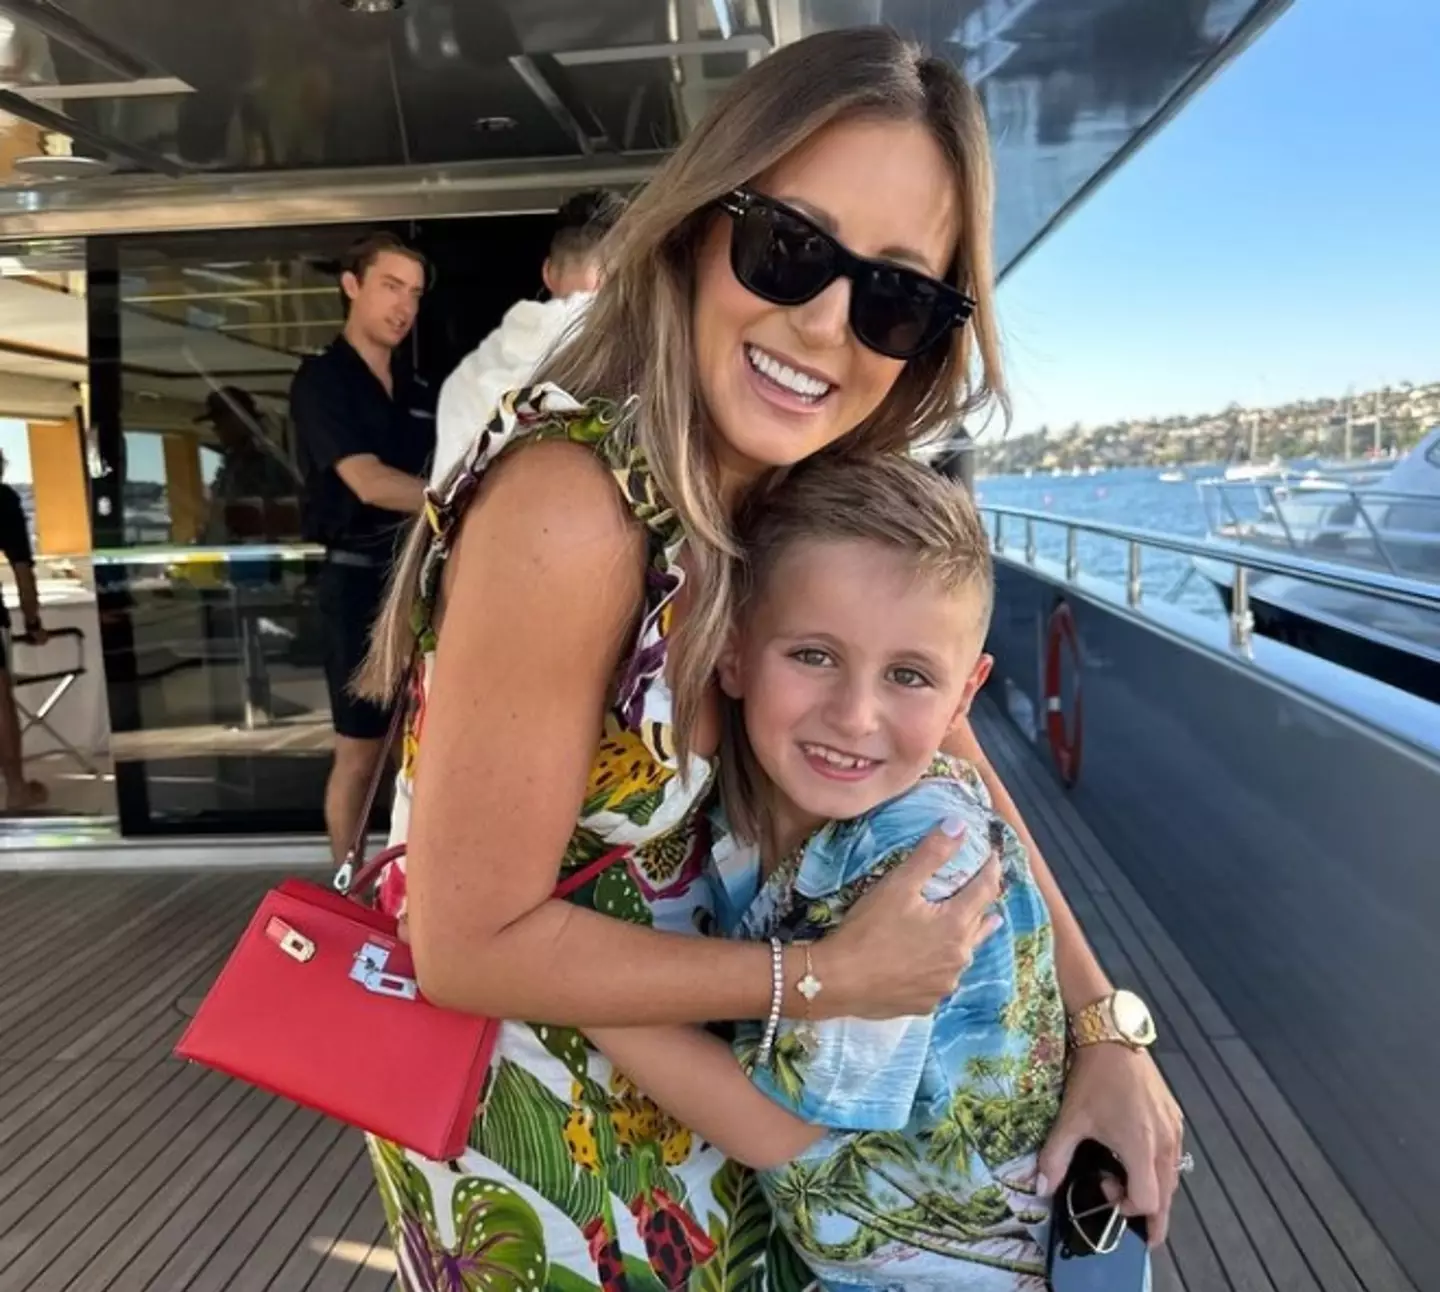 Australian businesswoman Roxy Jacenko threw a lavish AUS$50,000 birthday party for her son.